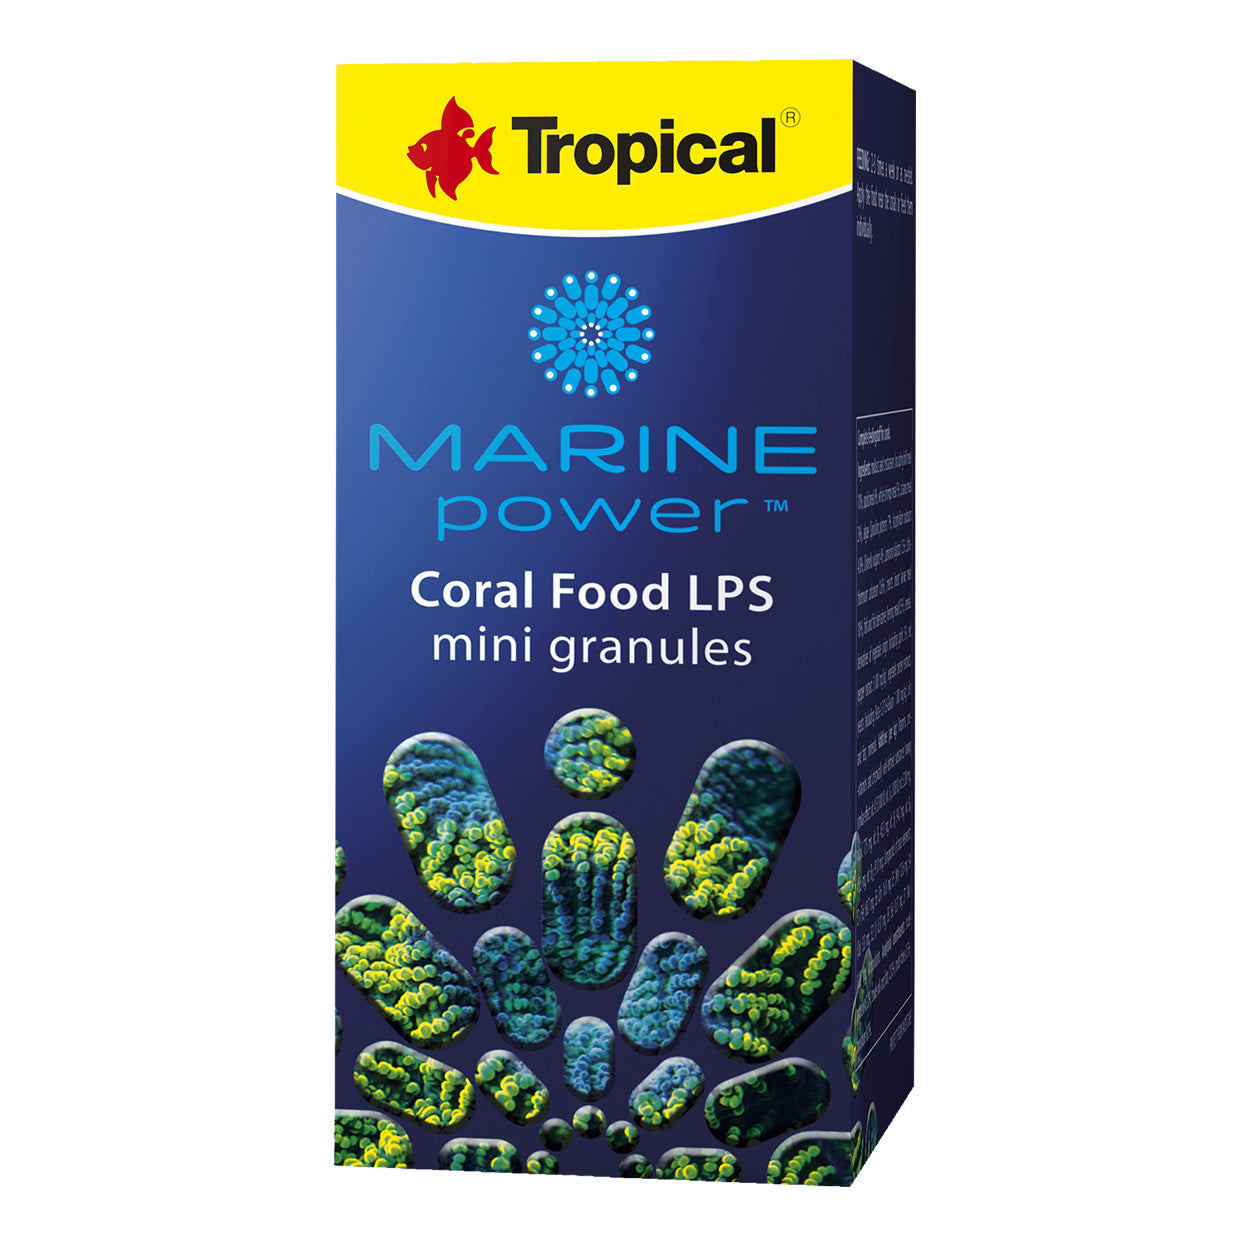 Tropical Marine Power Coral Food